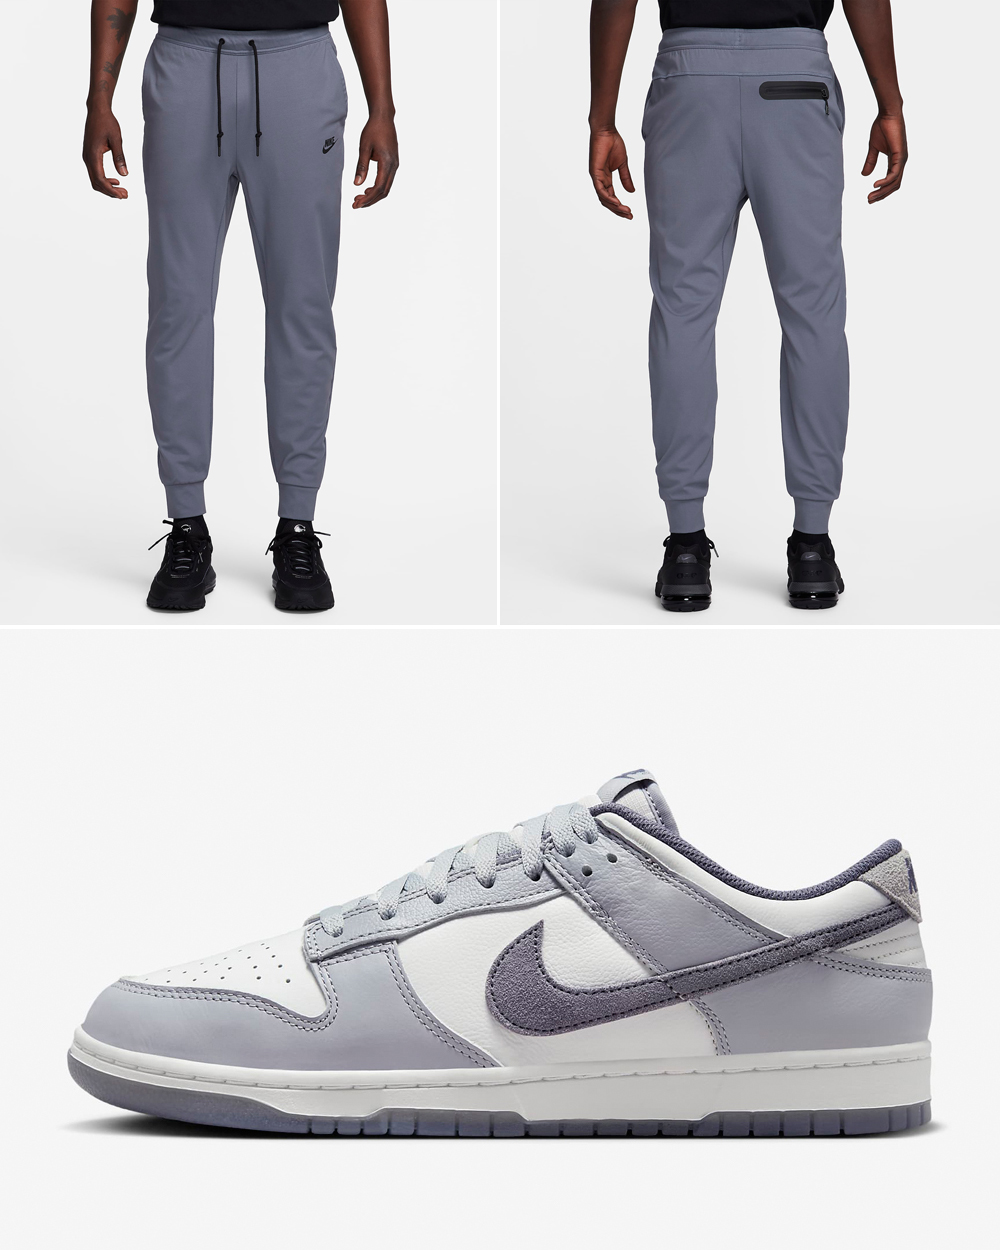 Nike-Dunk-Low-Light-Carbon-Pants-Outfit